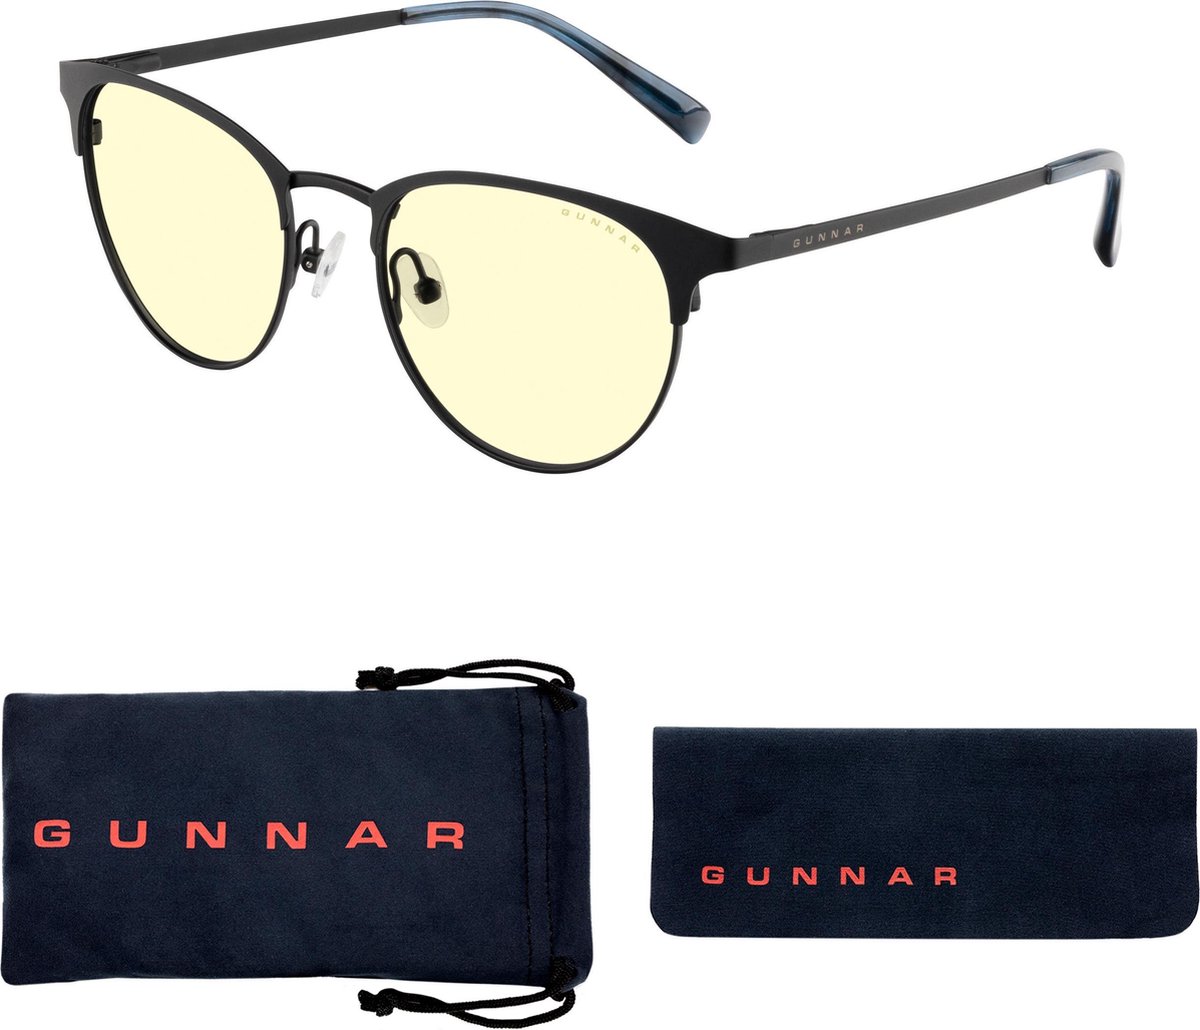 GUNNAR Gaming- en Computerbril - Apex, Onyx Navy, Amber Tint - Blauw Licht Bril, Beeldschermbril, Blue Light Glasses, Leesbril, UV Filter